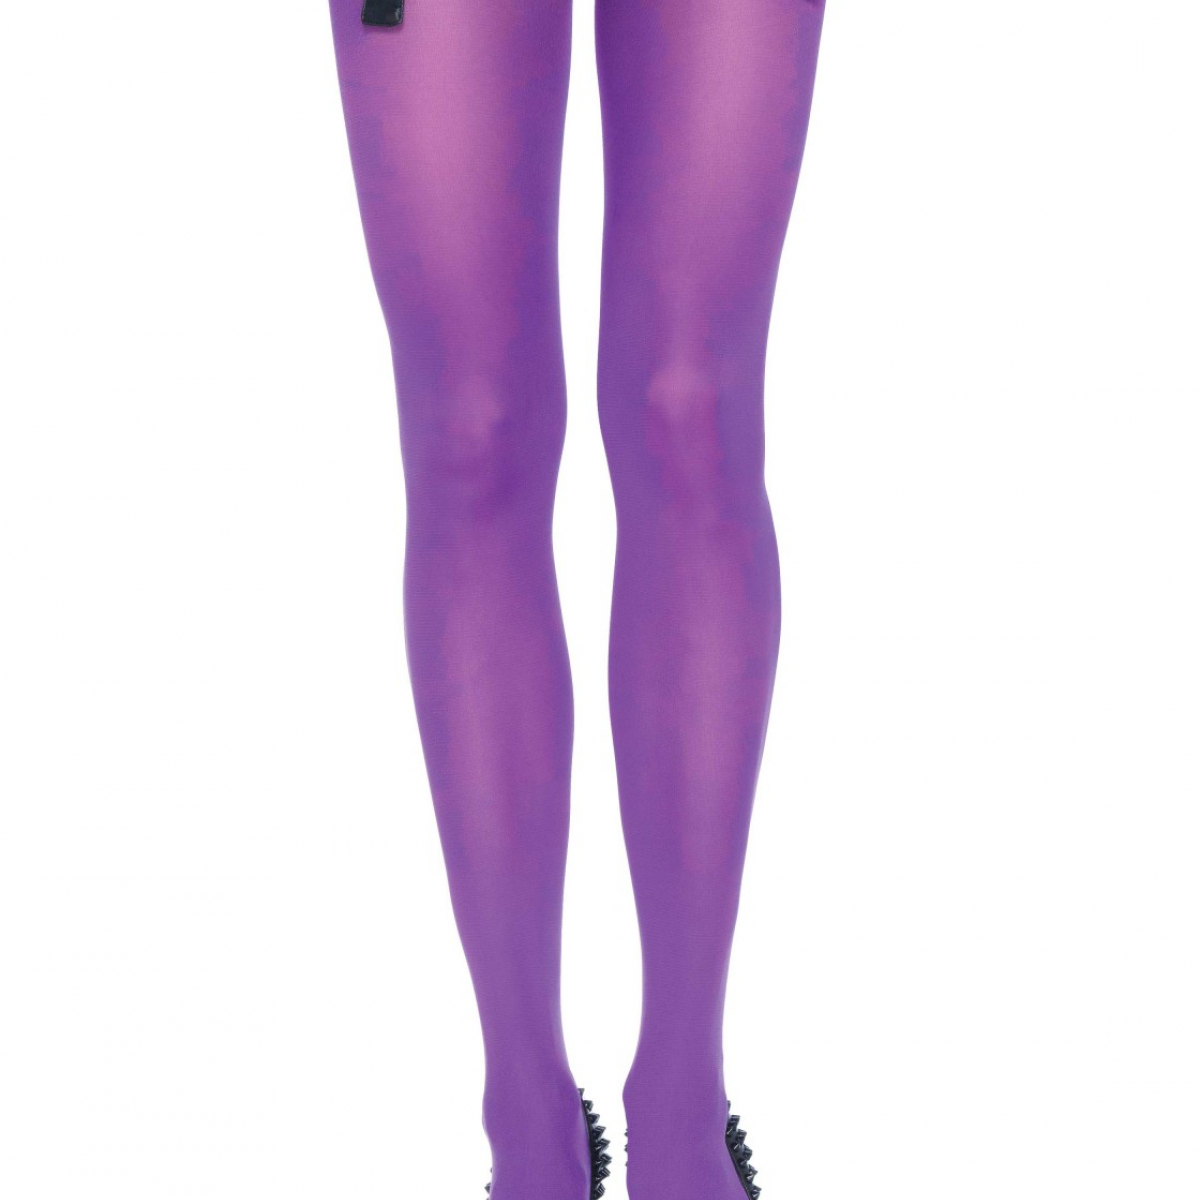 Nylon Opaque Pantyhose Purple Beenmode Panty Ladywear